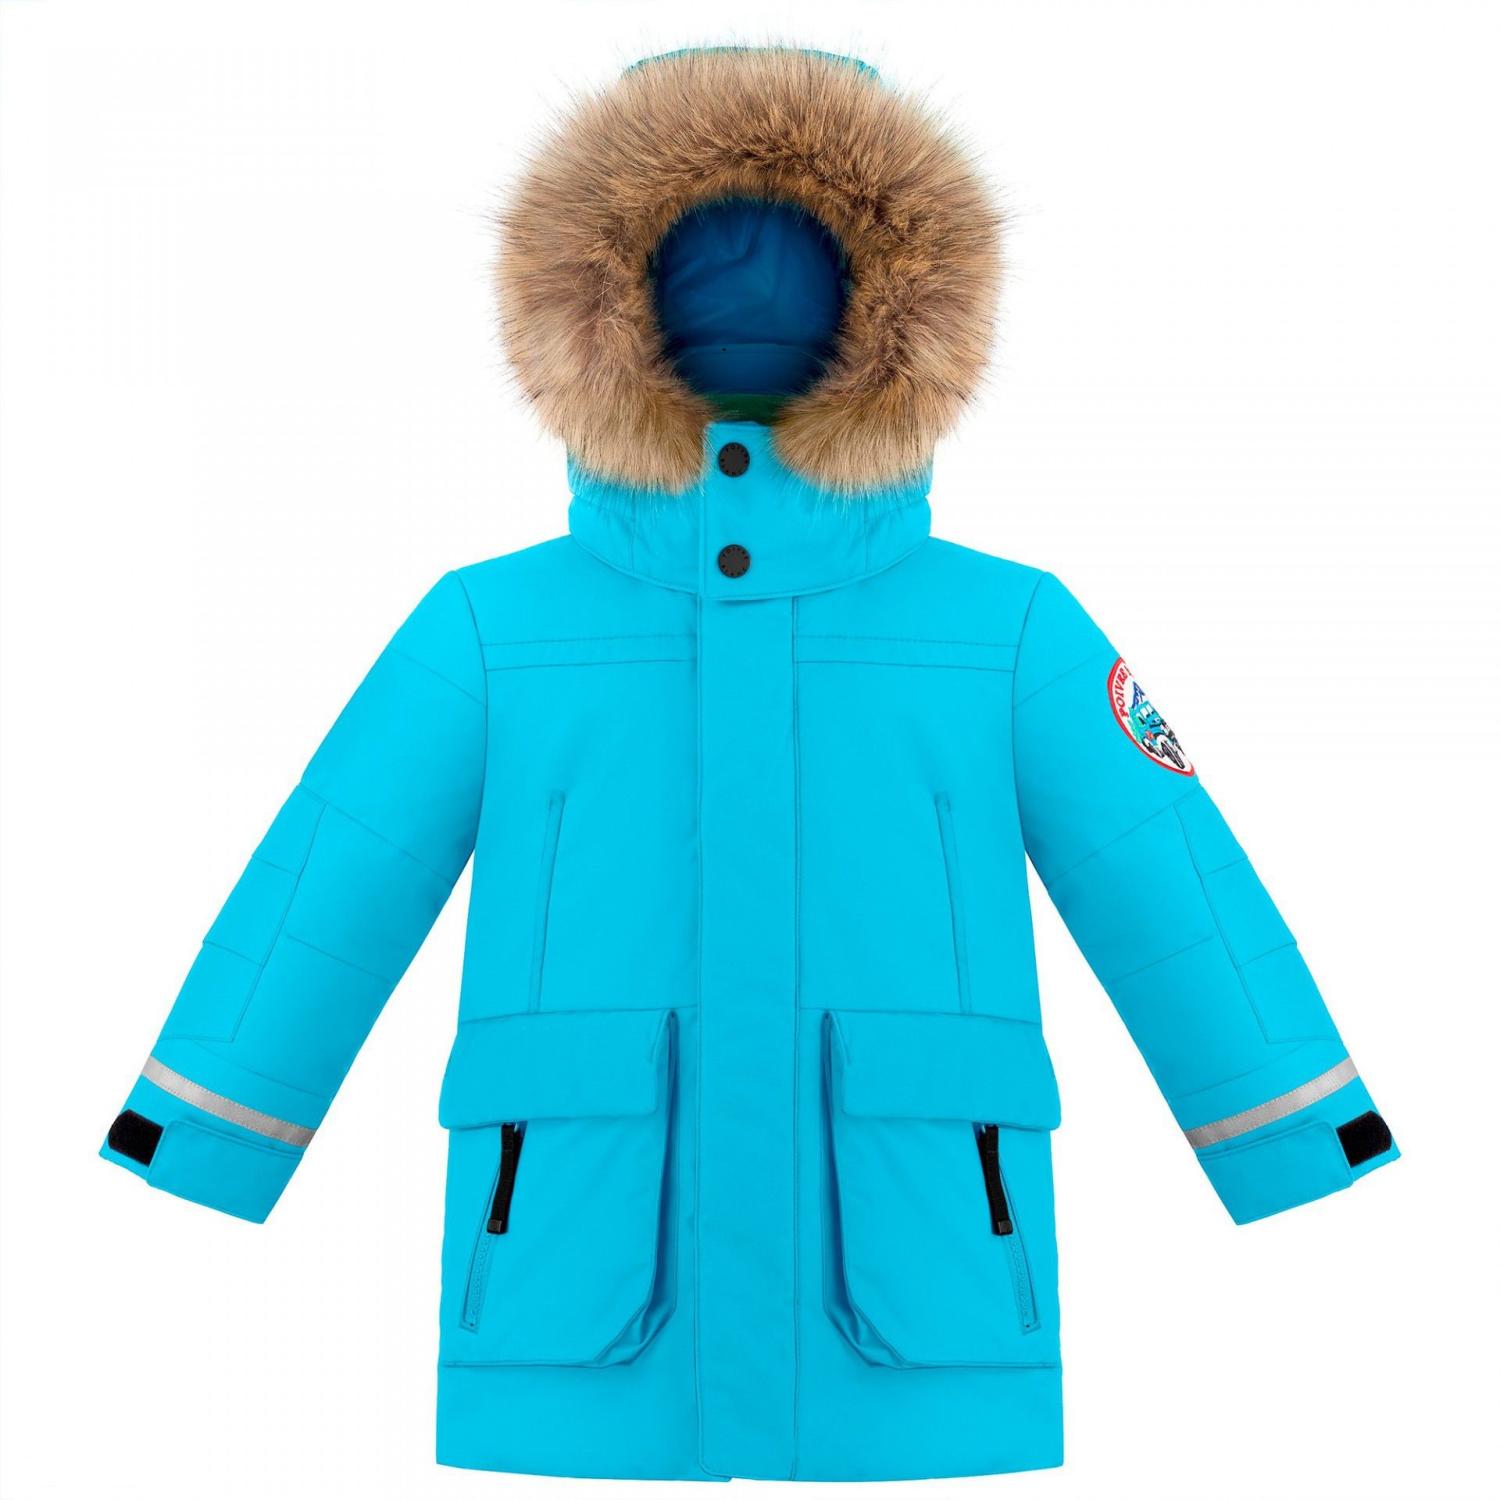 Куртка горнолыжная Poivre Blanc 19-20 Parka Aqua Blue куртка горнолыжная poivre blanc 19 20 ski jacket aqua blue